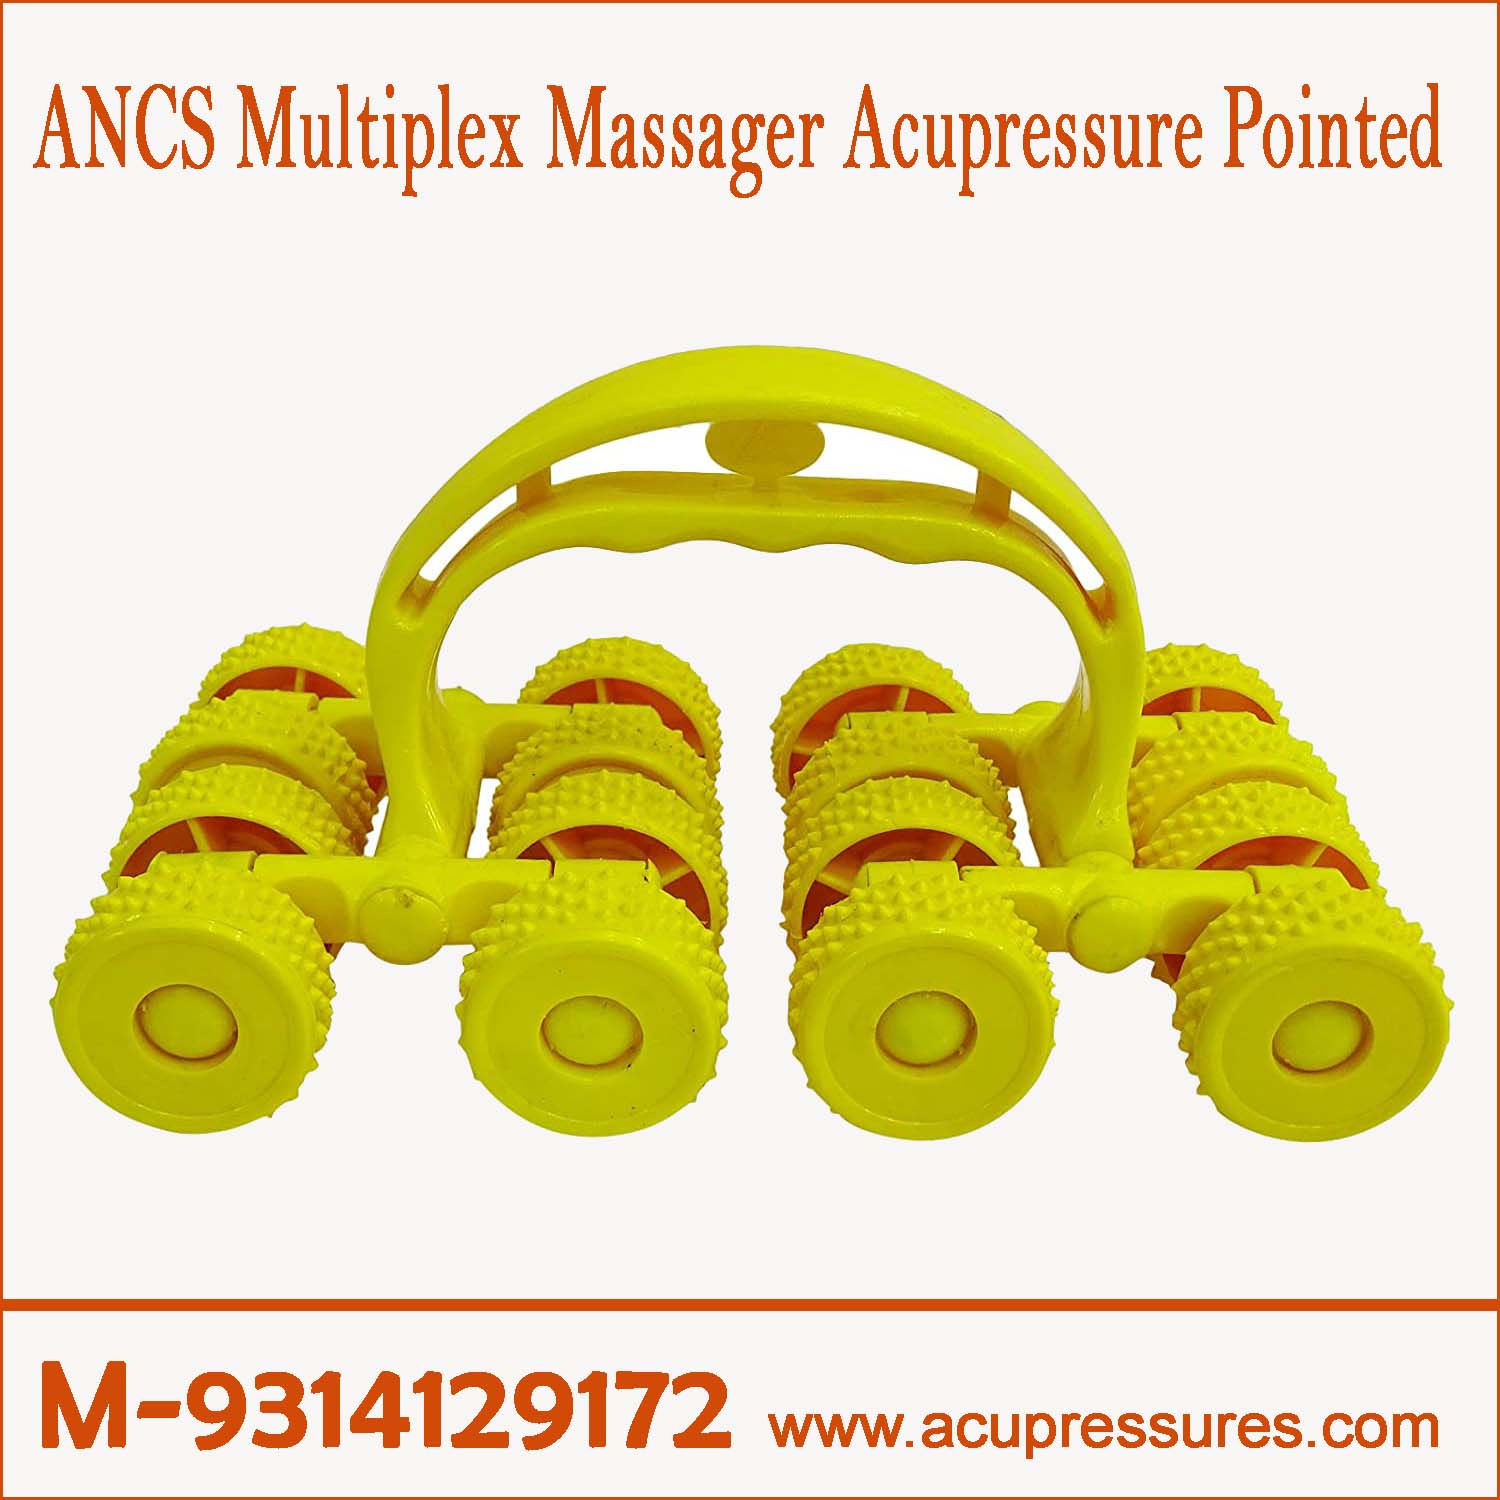 ANCS Acupressure Multiplex Massager Pointed 